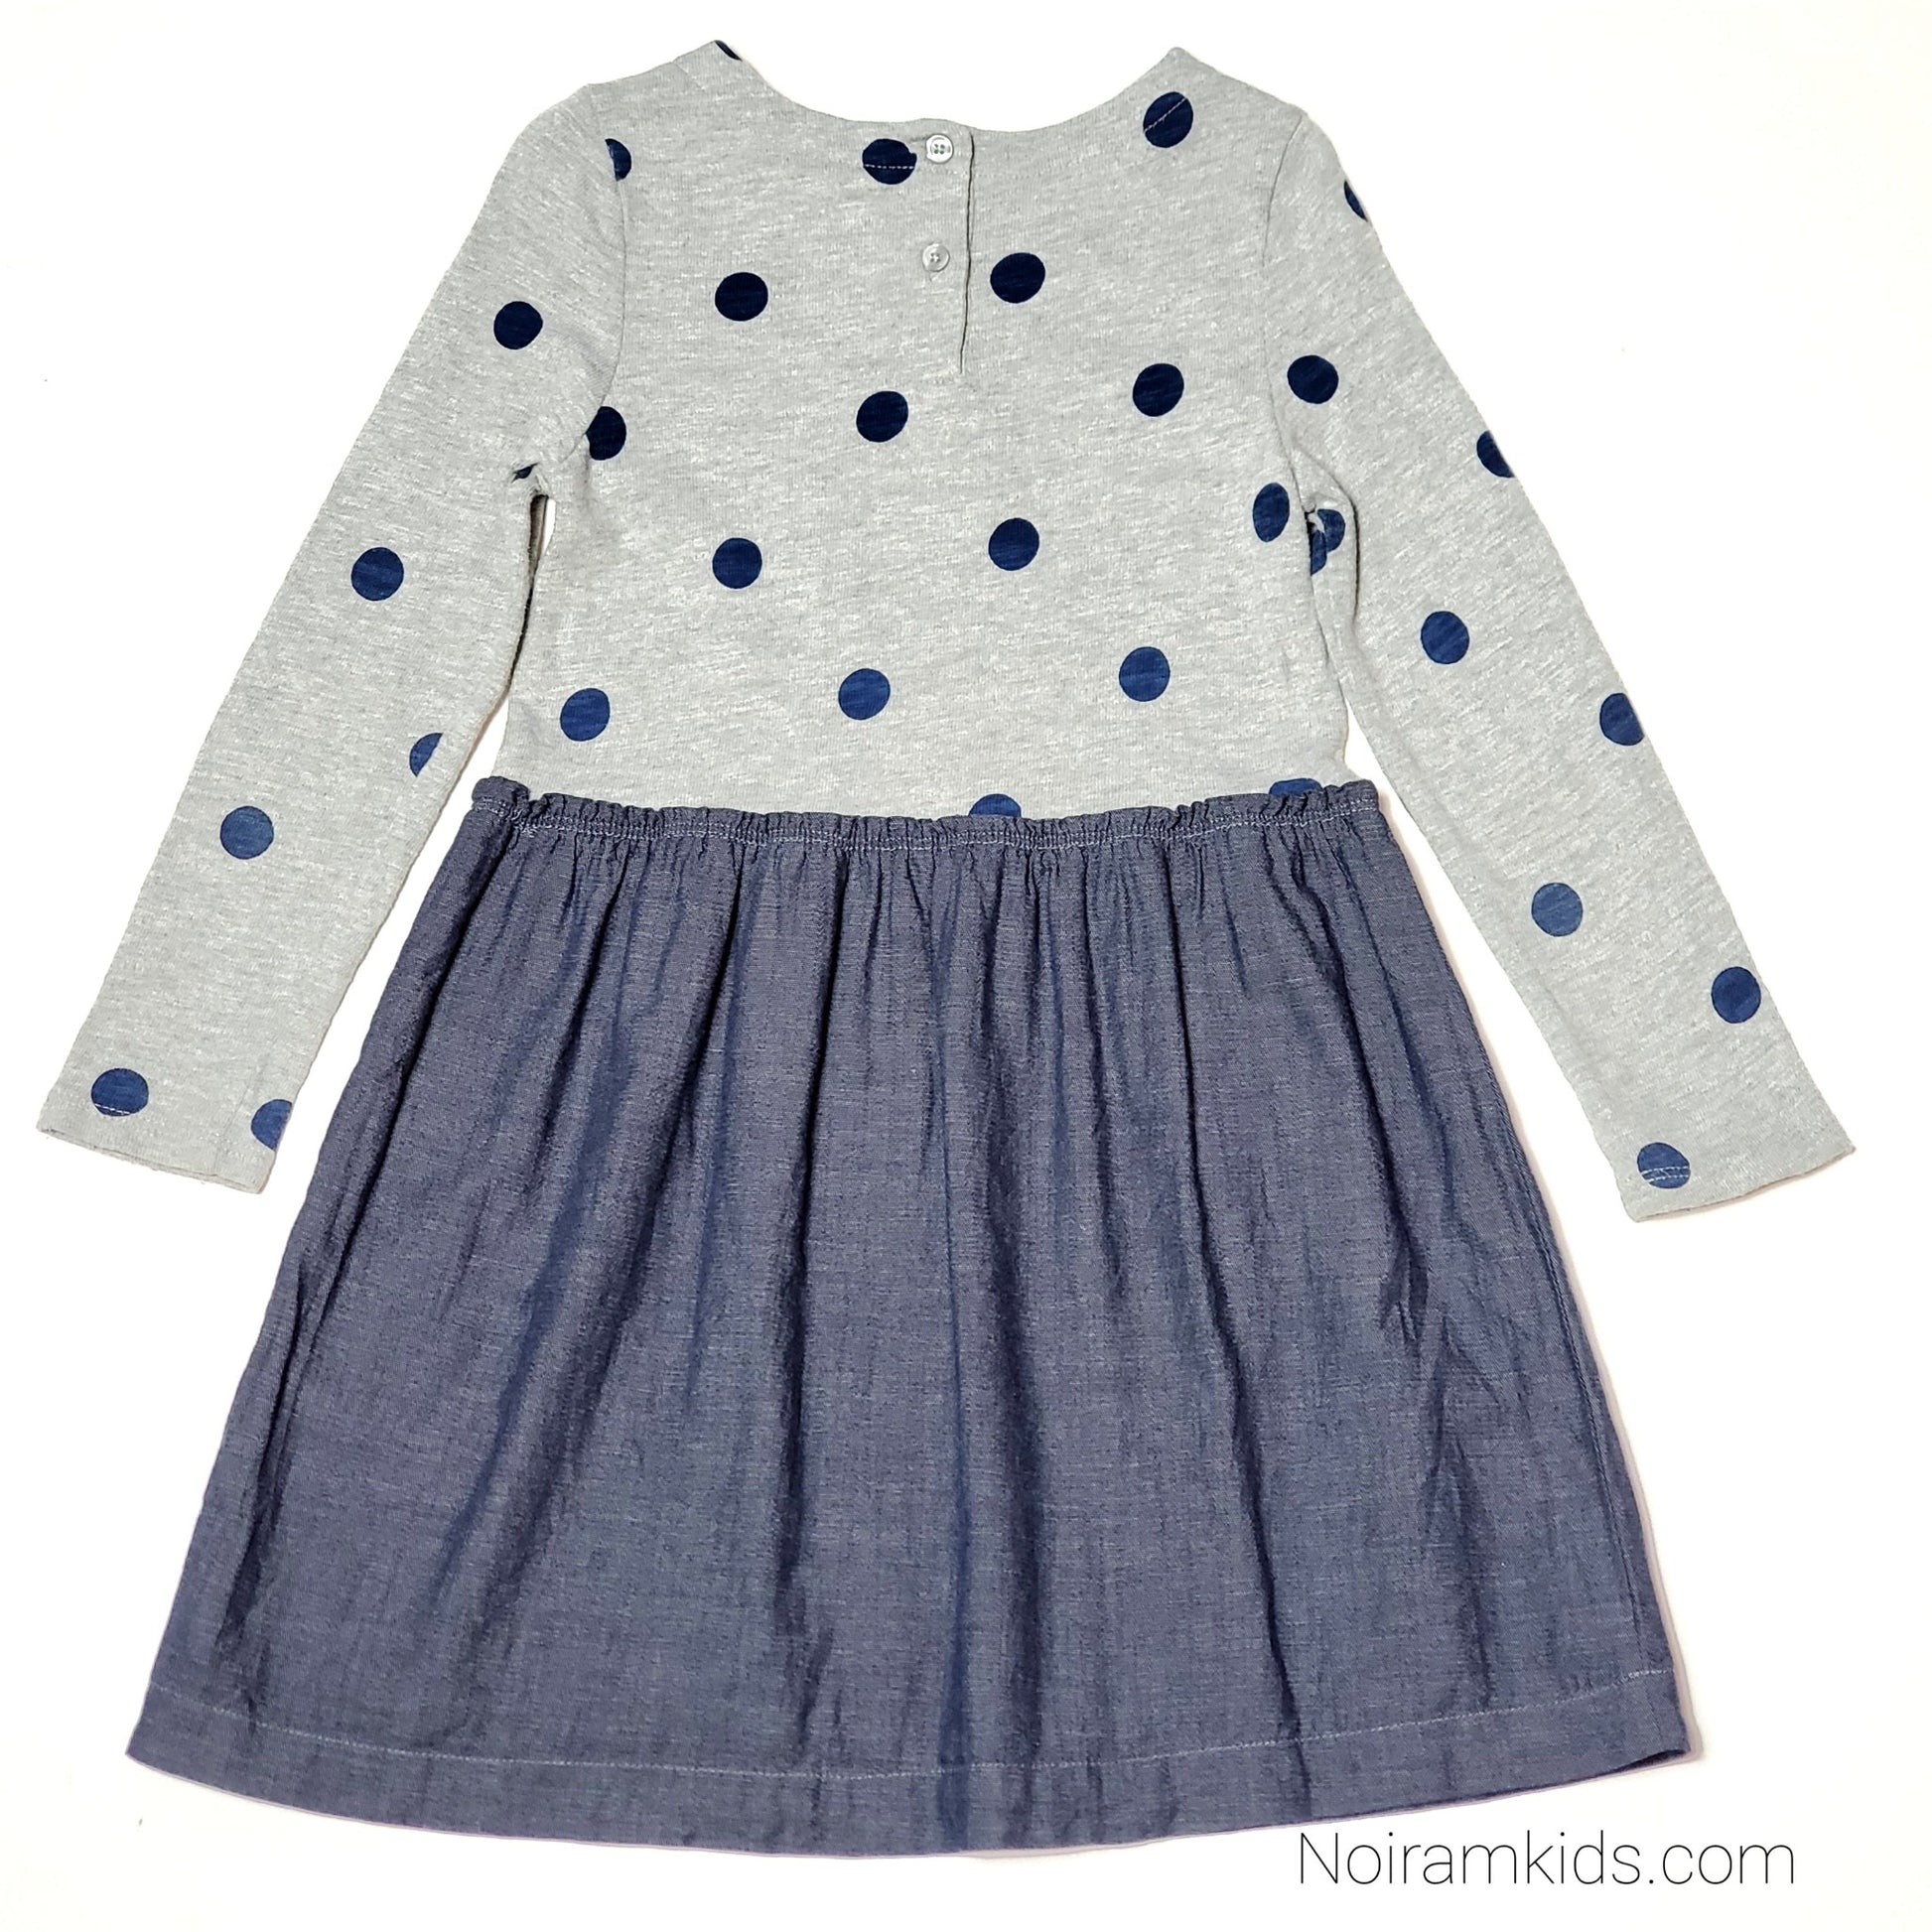 Gap Grey Polka Dot Girls Dress Size 5 Used View 3